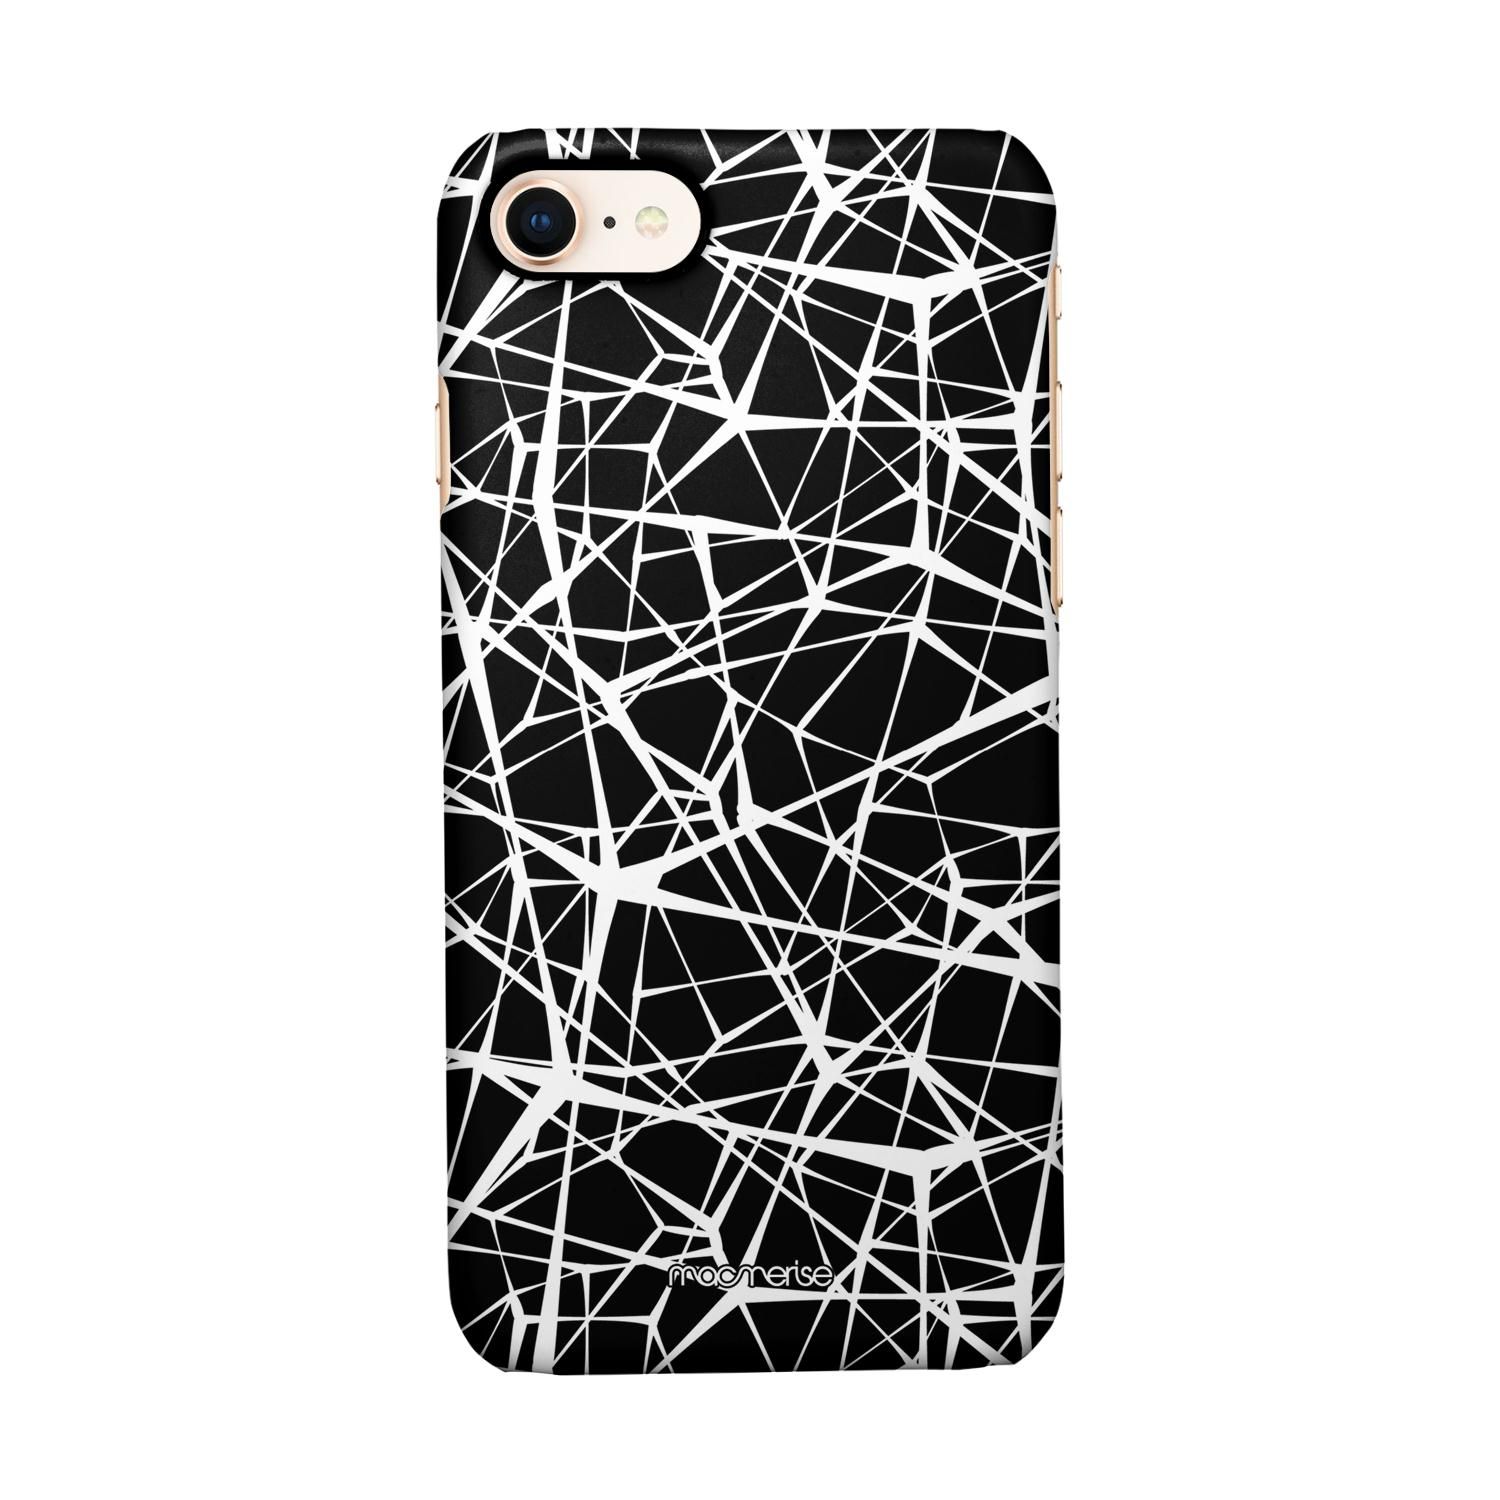 Buy Grunge Web - Sleek Phone Case for iPhone 7 Online